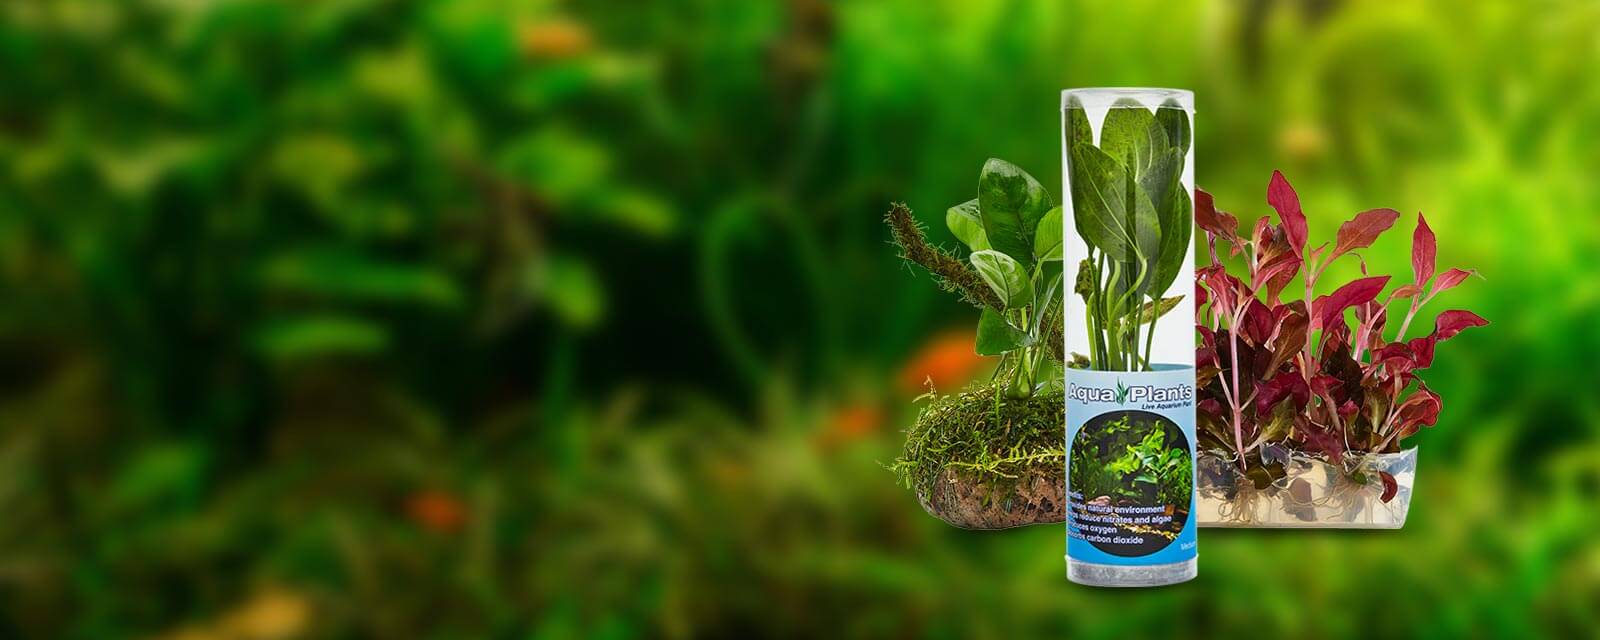 green aquatic plant in plastic tube